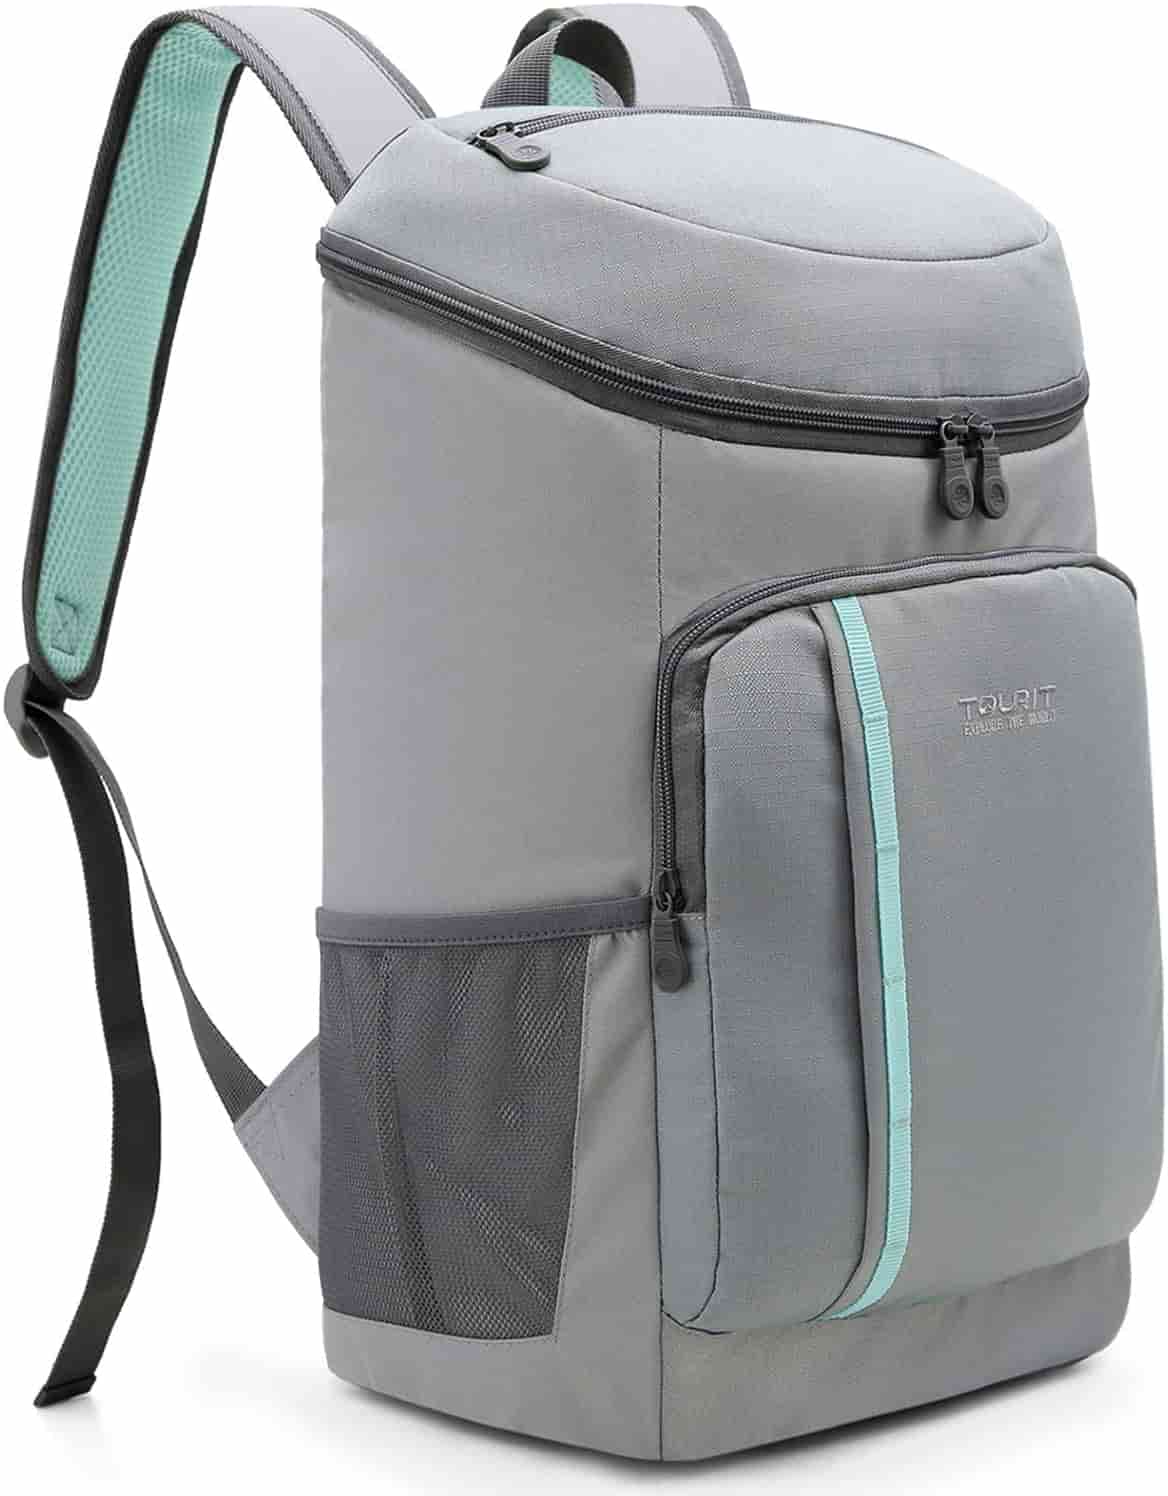 TOURIT Lightweight Insulated Backpack Cooler